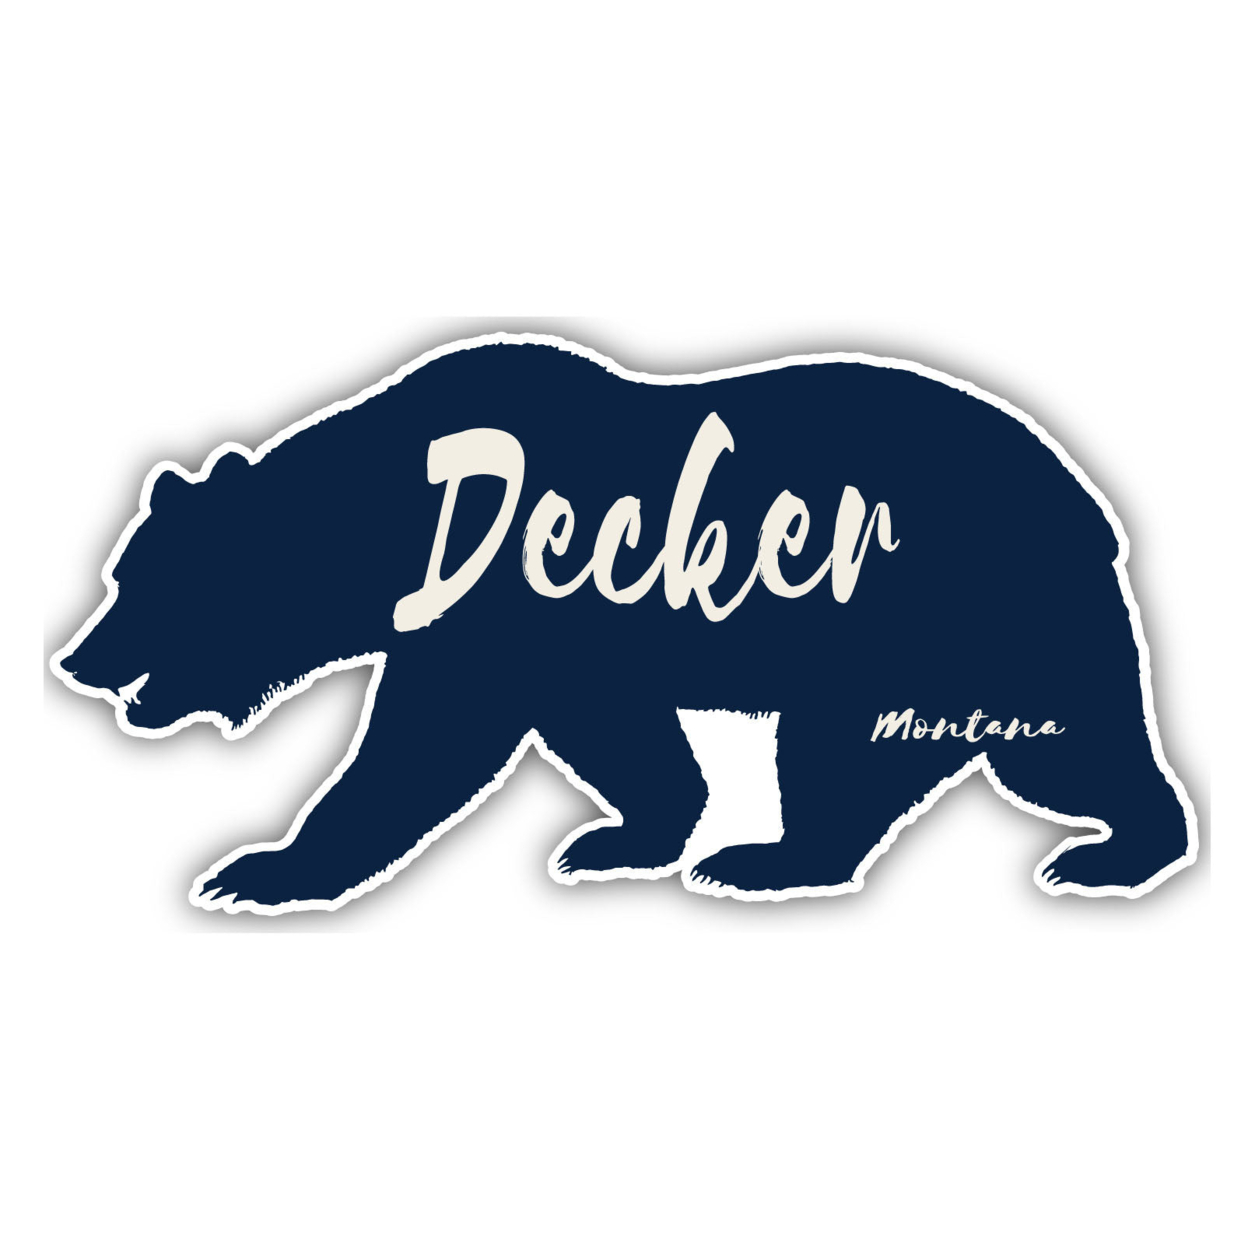 Decker Montana Souvenir Decorative Stickers (Choose Theme And Size) - 4-Pack, 12-Inch, Bear